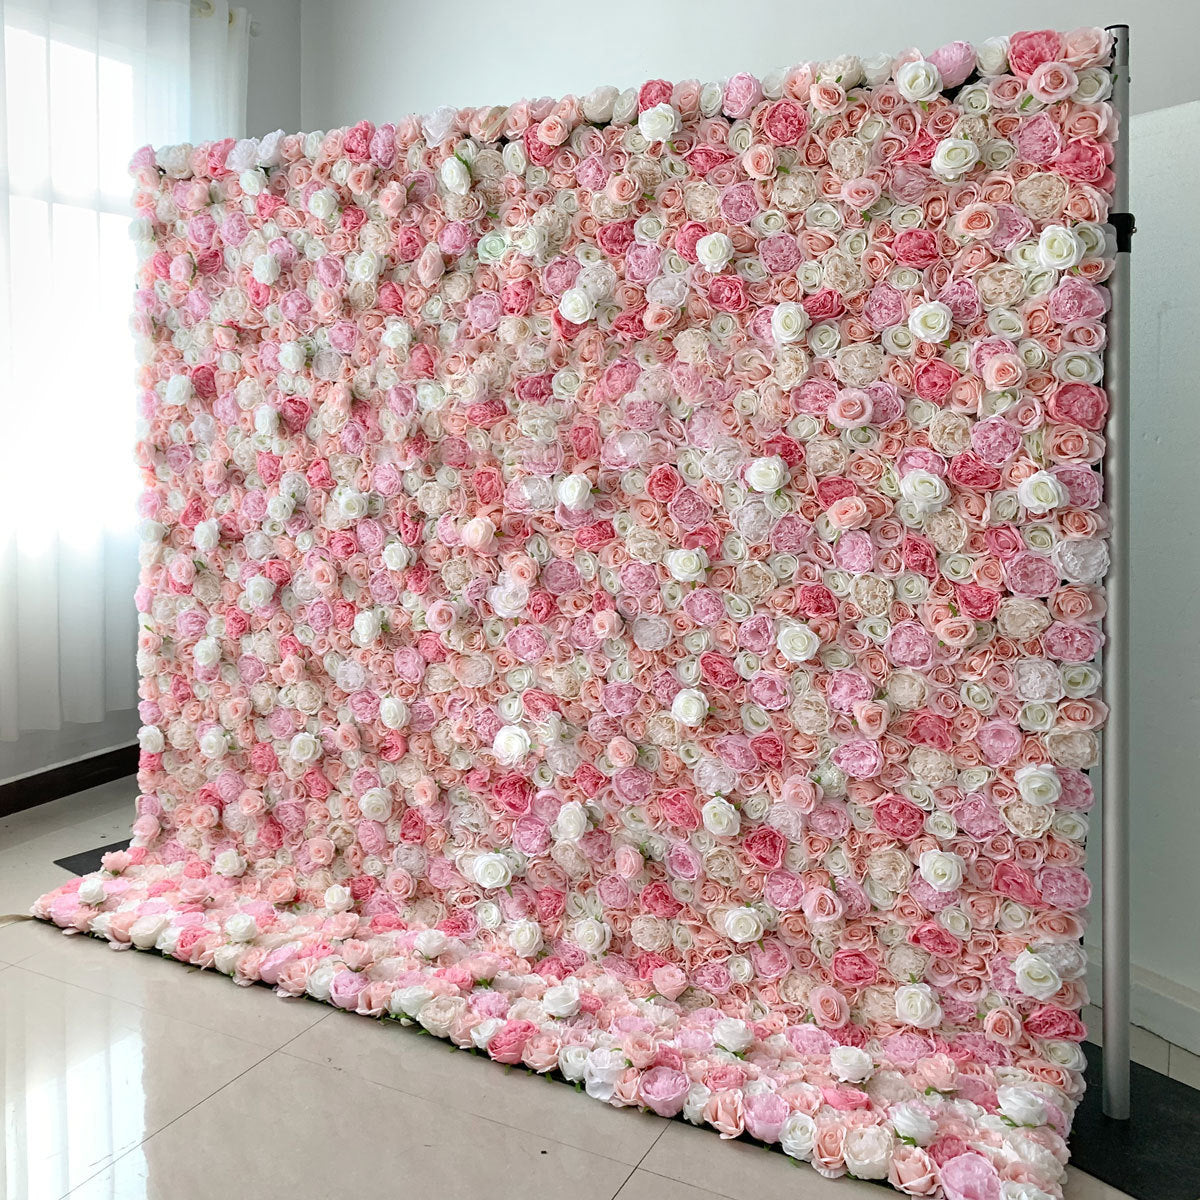 3D Artificial Flower Wall Arrangement Wedding Party Birthday Backdrop Decor HQ1161